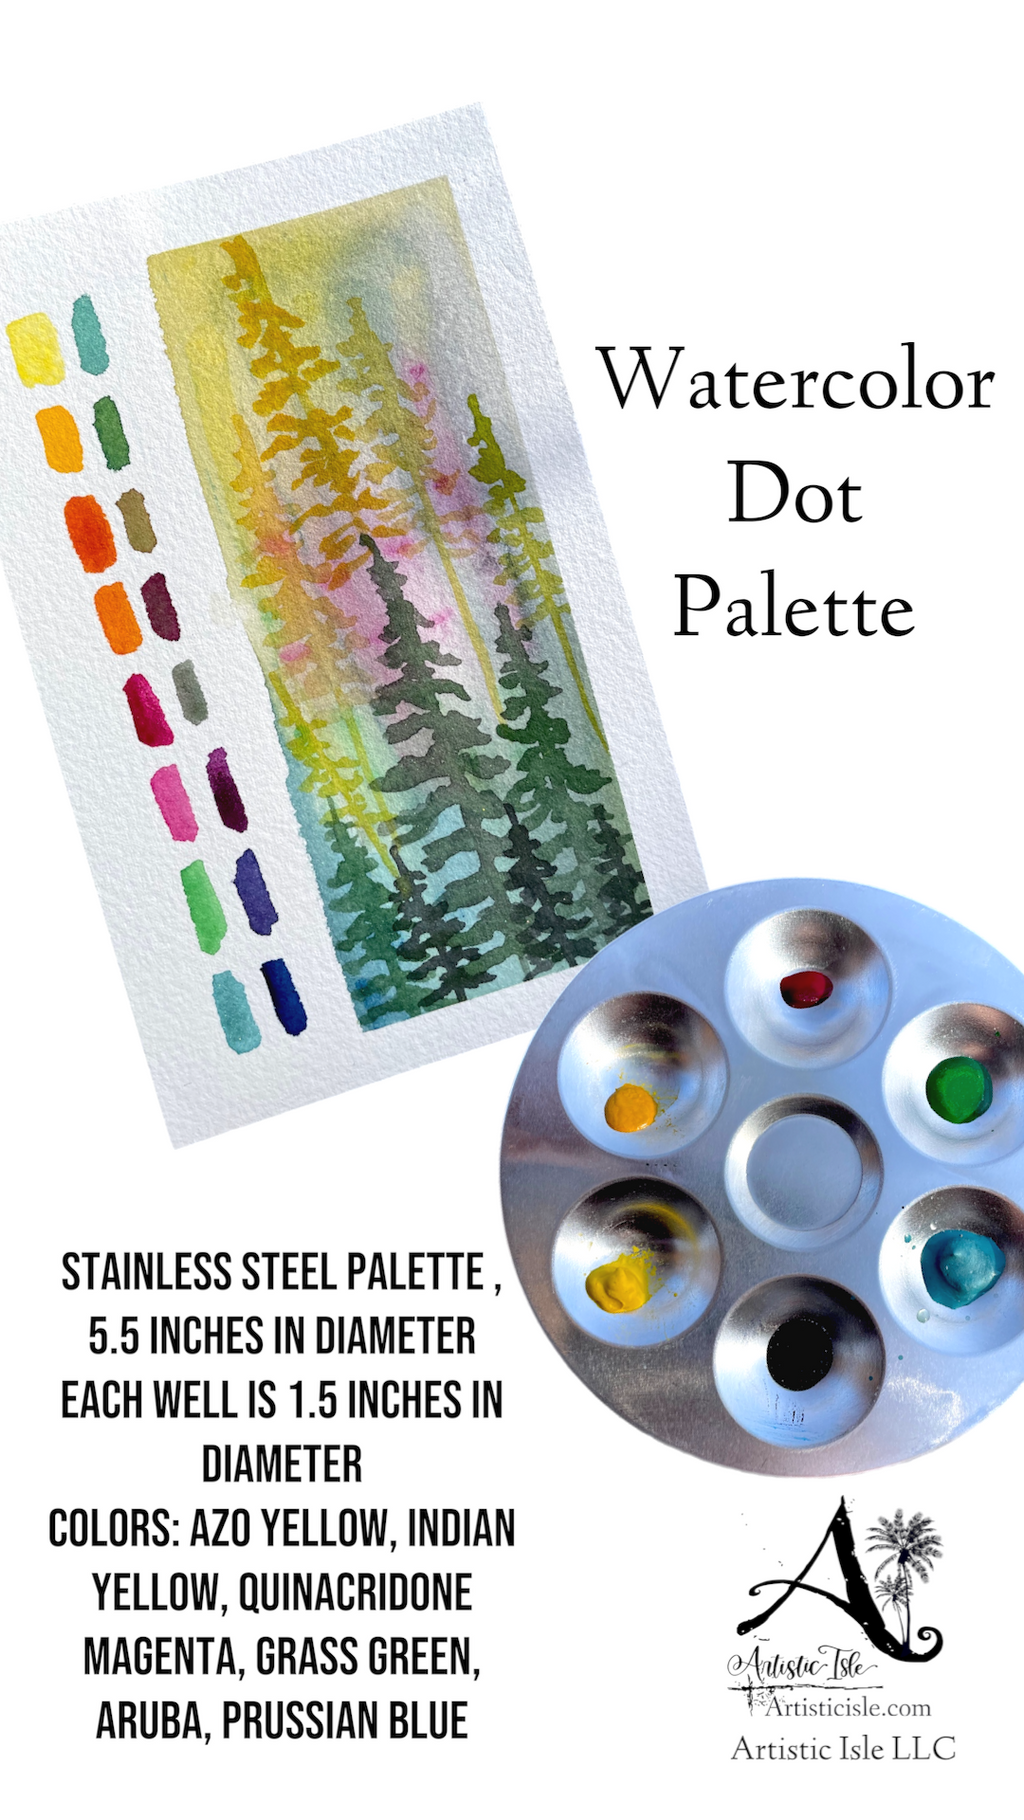 Watercolor dot palette